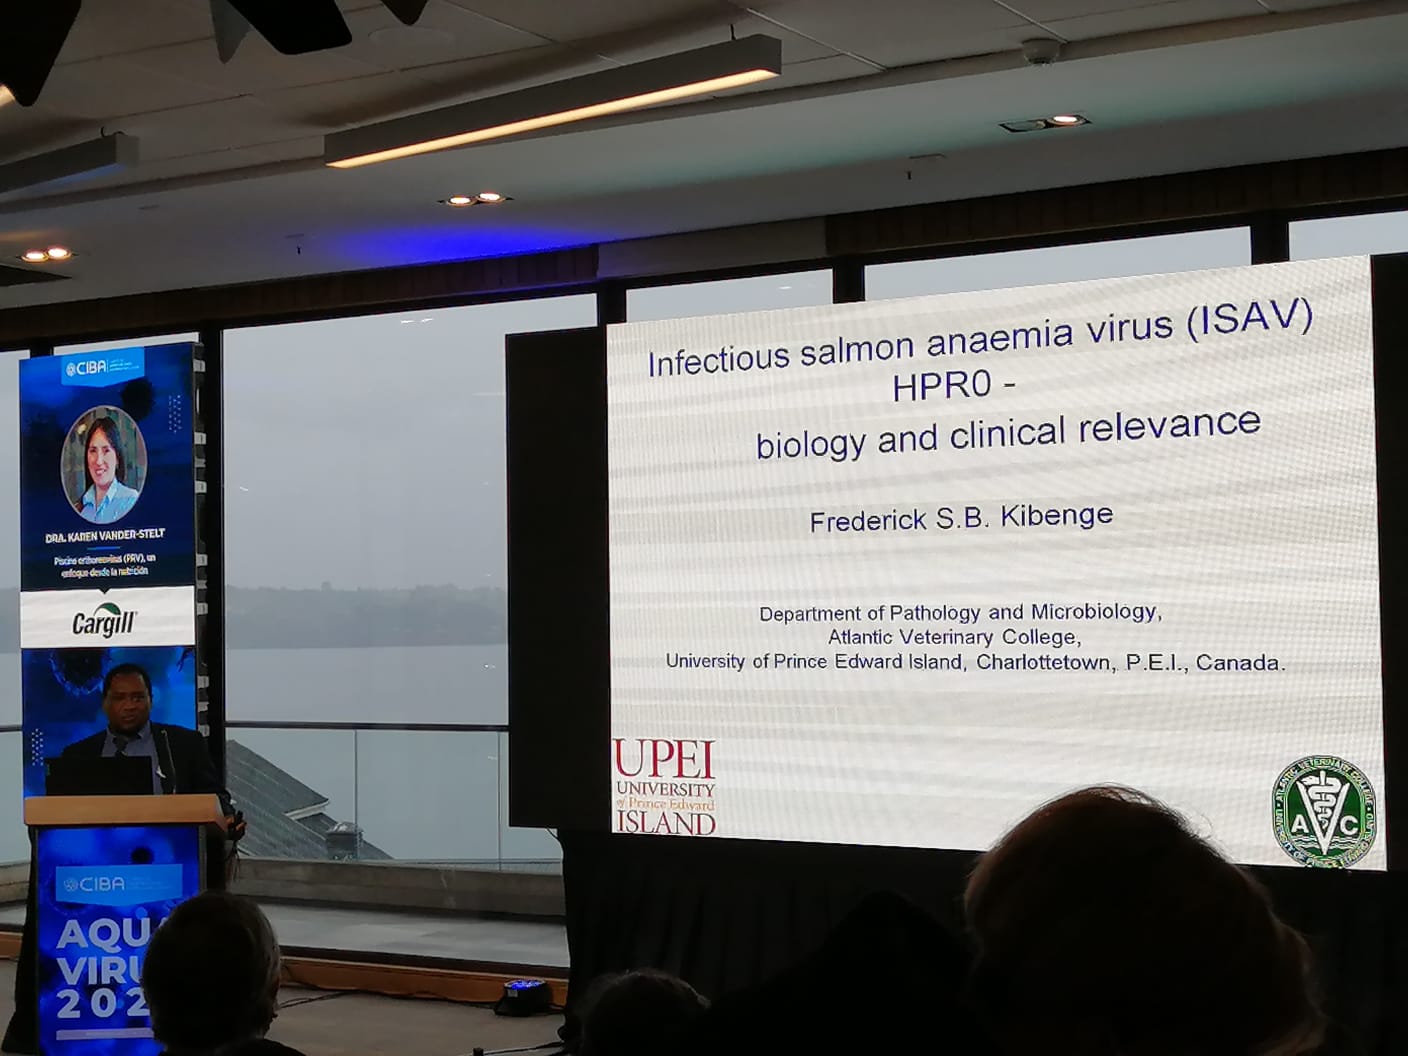 Aquavirus 2022 reunió a grandes expertos mundiales en enfermedades virales en salmónidos